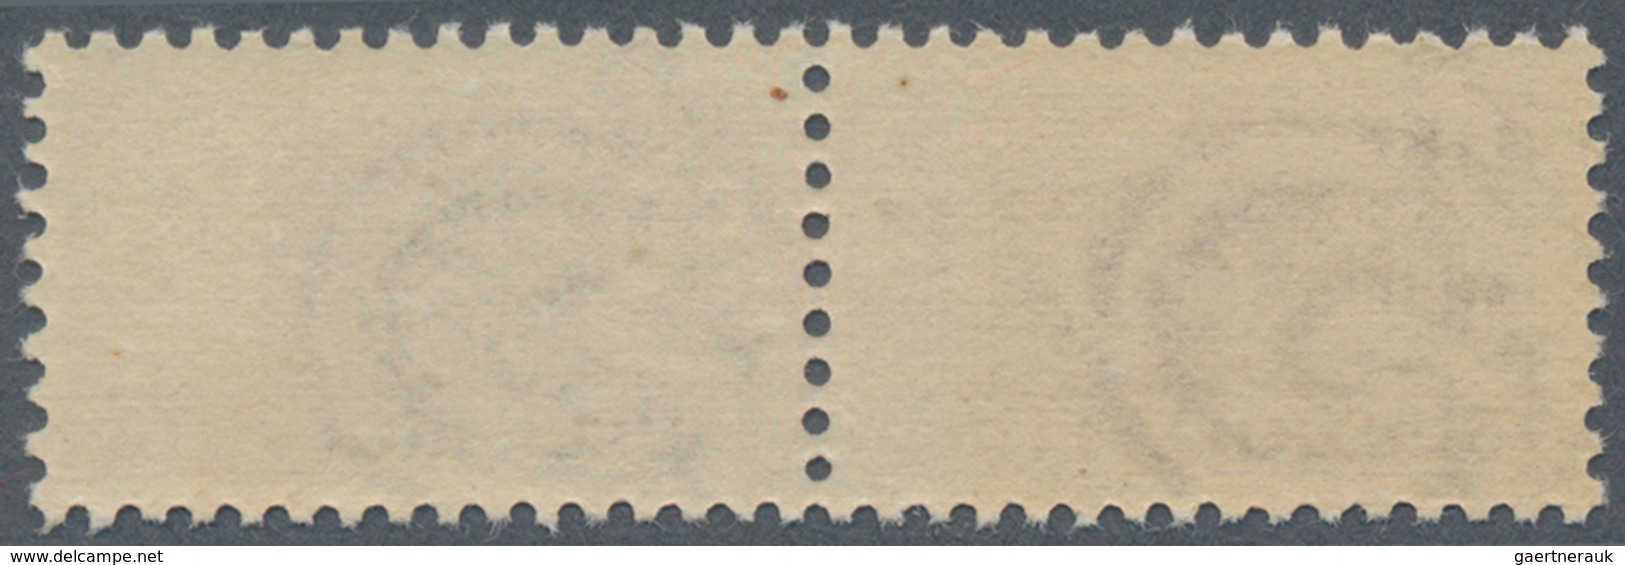 Italien - Paketmarken: 1948, 300 L Brownish Purple Mint Never Hinged (Sass. 1 500 €, Michel 2 200 €) - Postpaketten